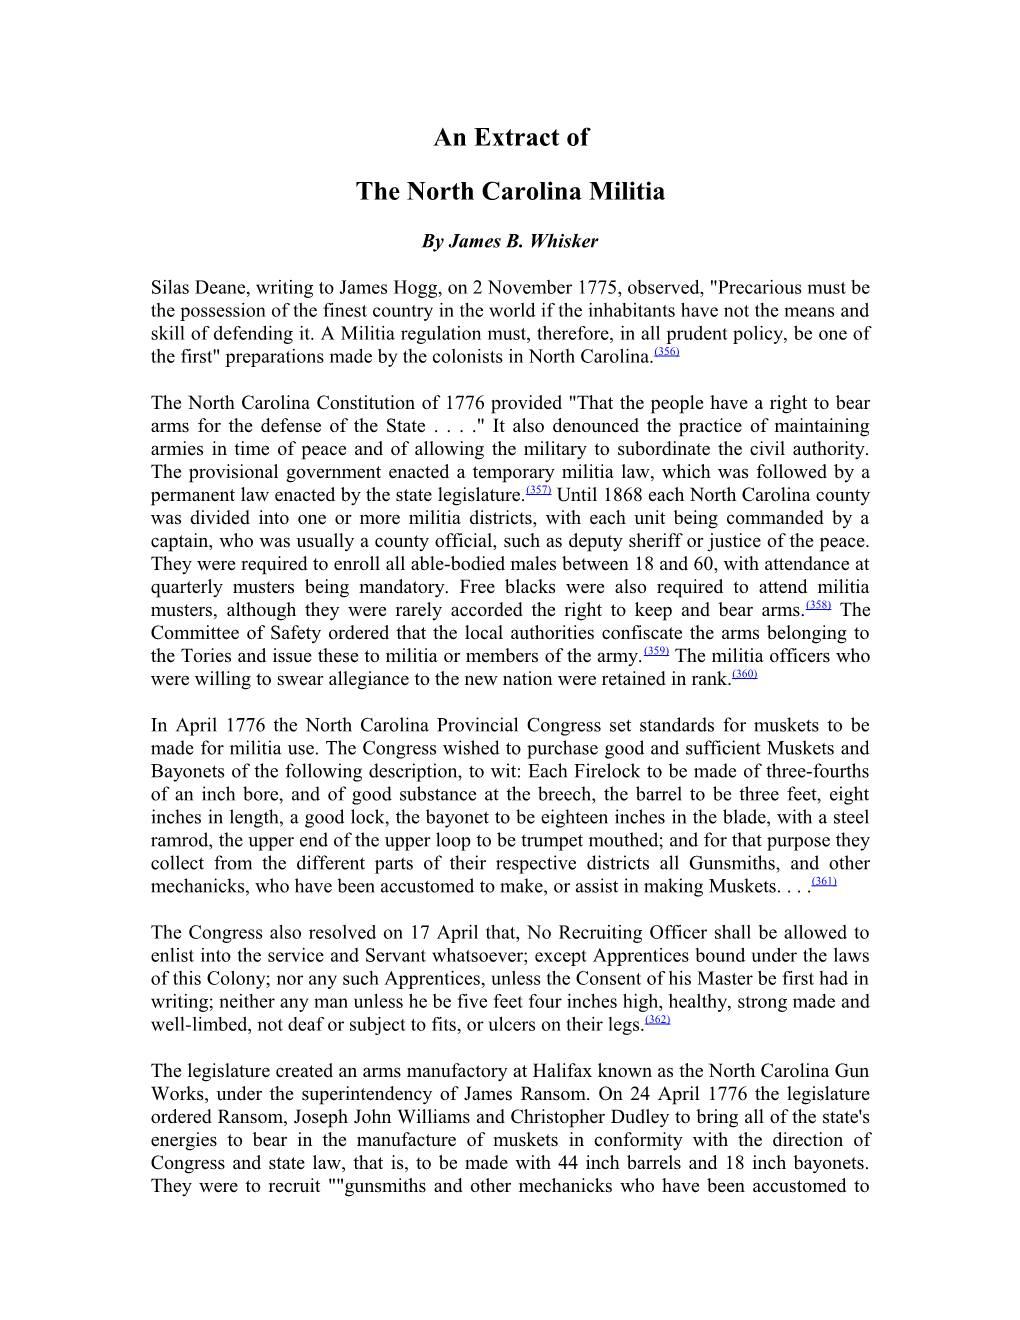 The North Carolina Militia